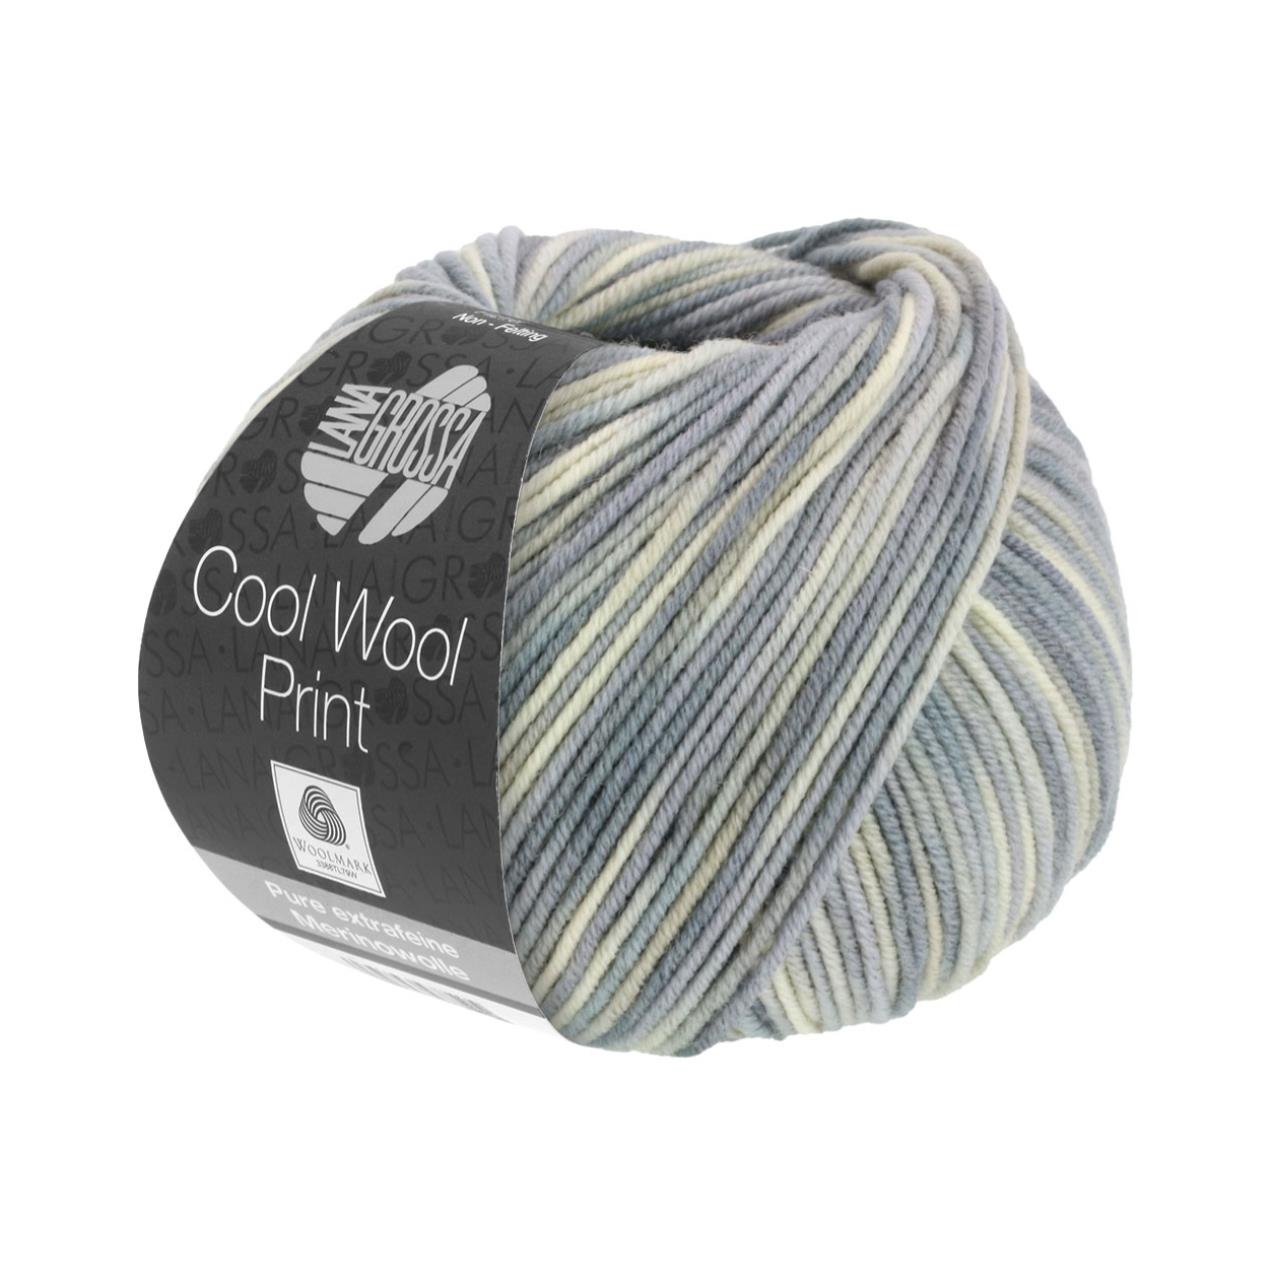 Cool Wool Print <br>829 Rohweiß/Silber-/Hellgrau/Grau